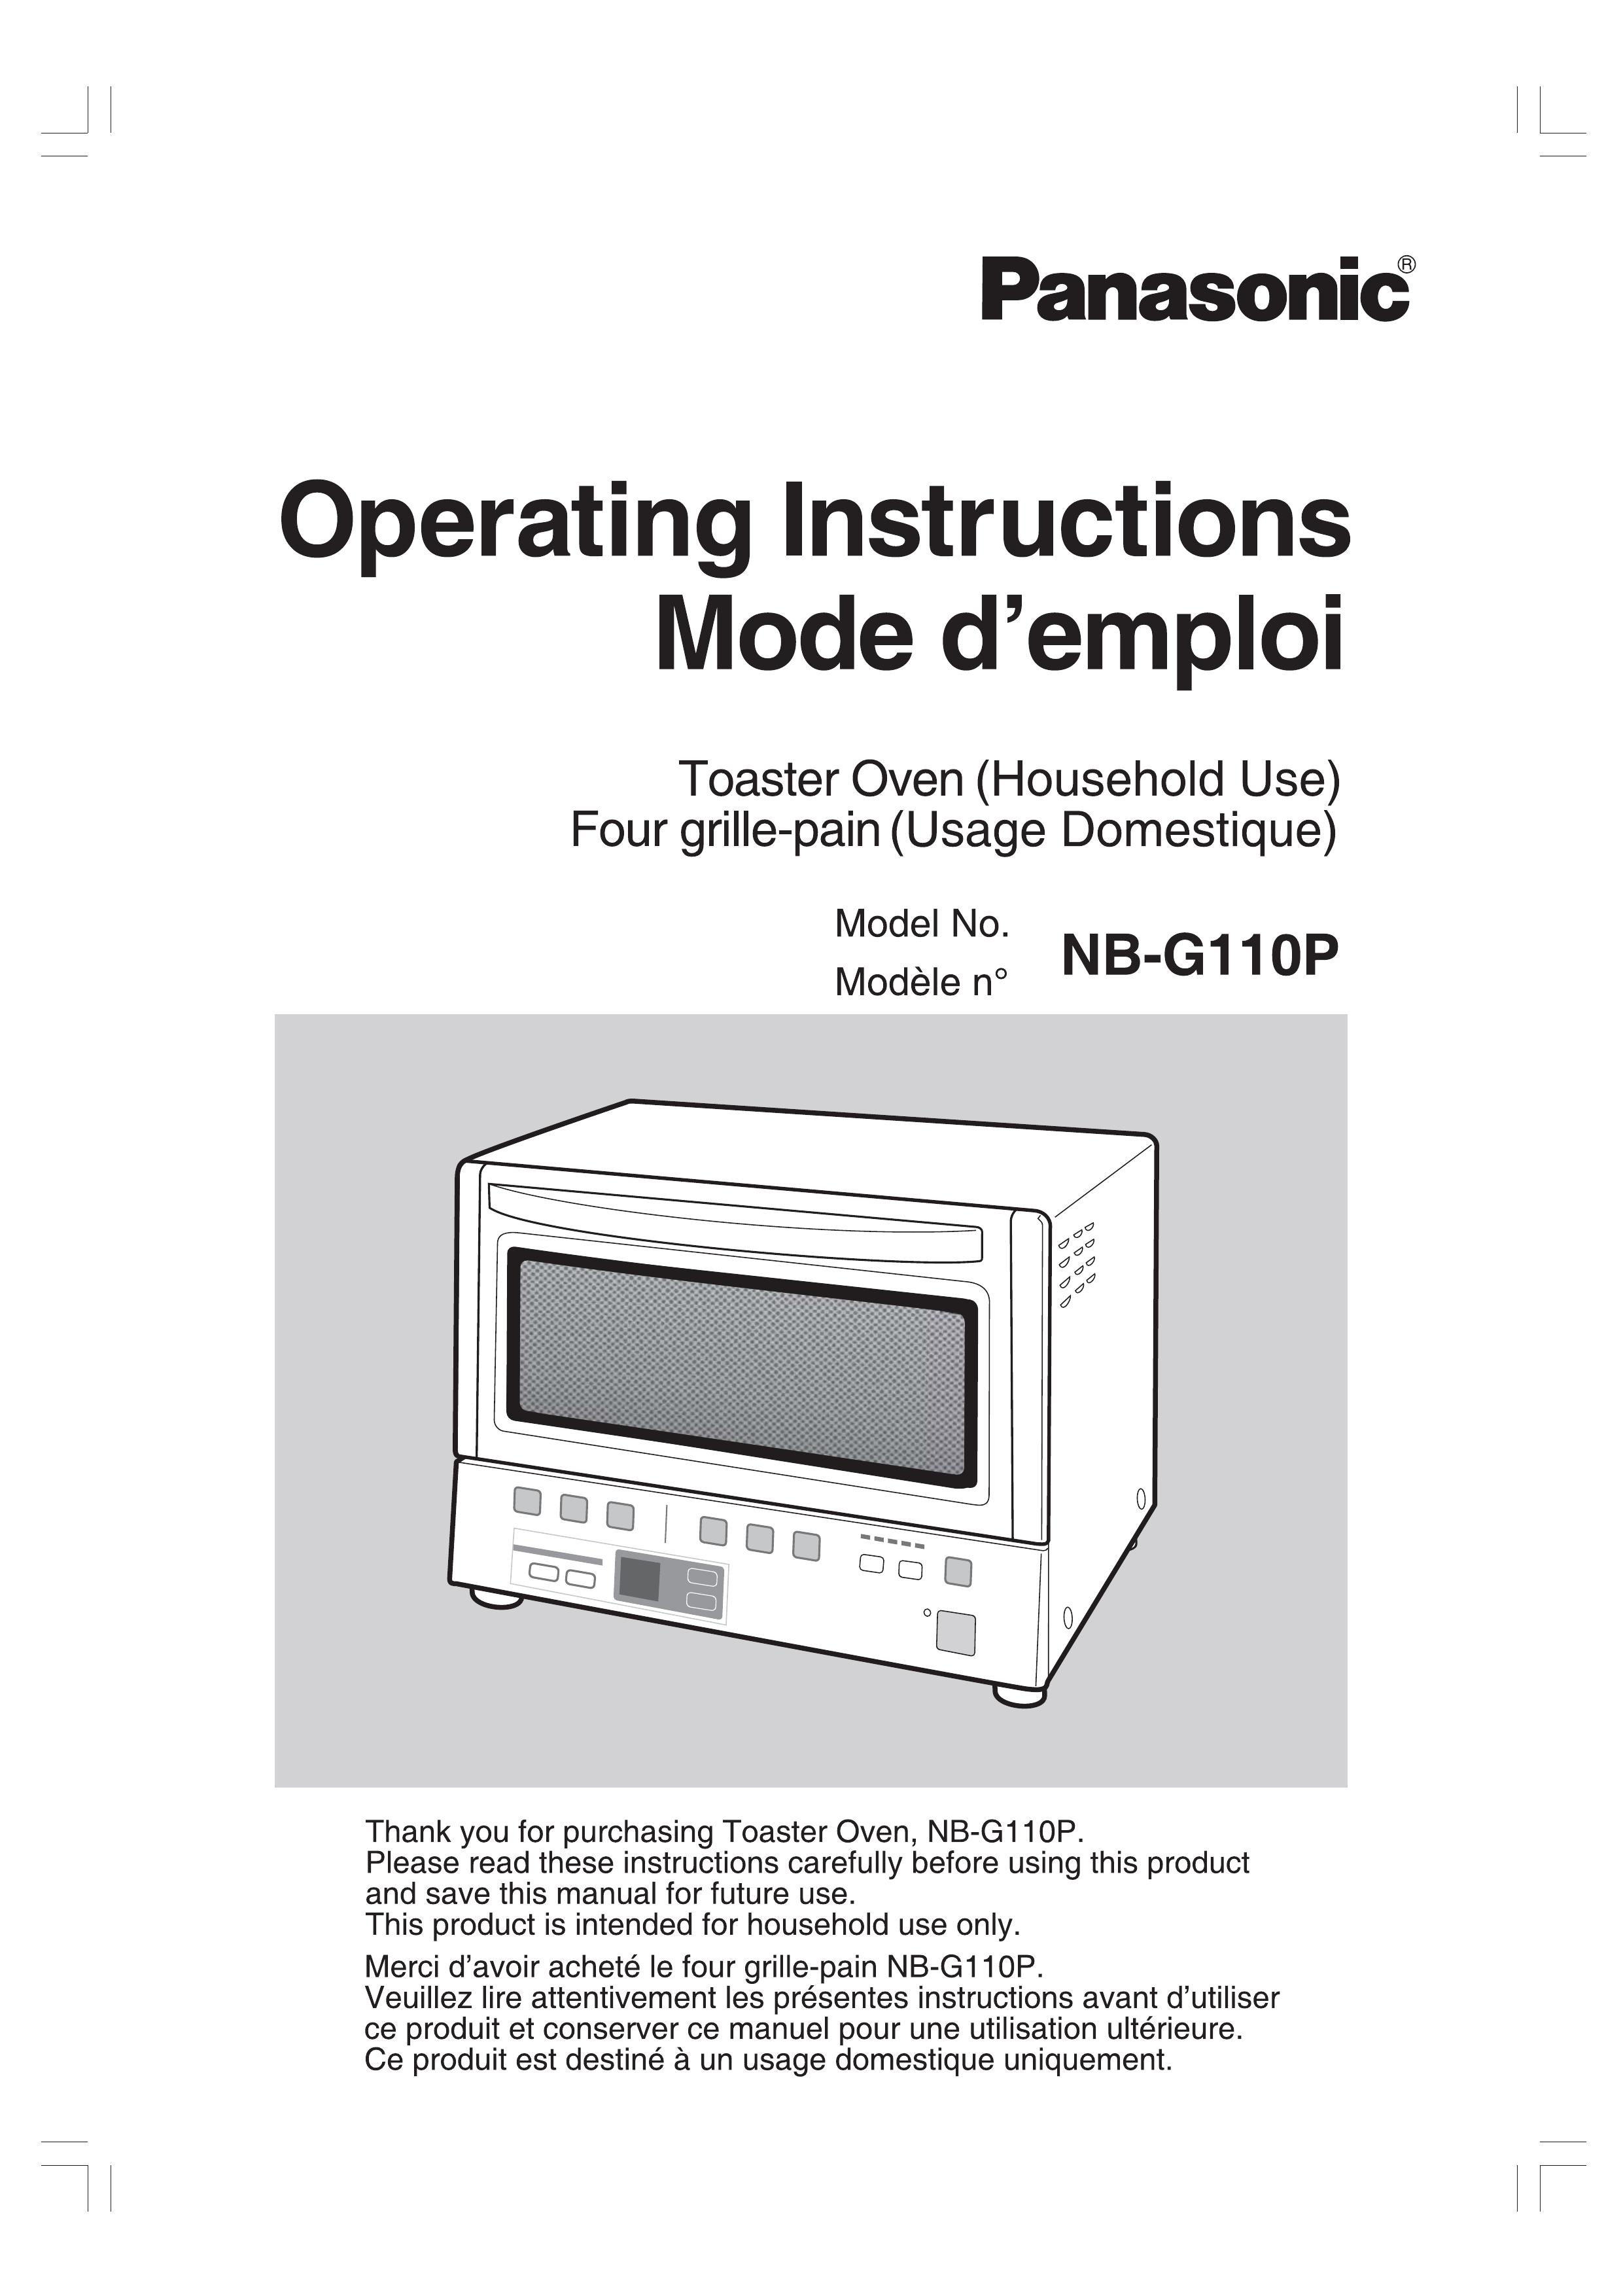 Panasonic NB-G110P Toaster User Manual